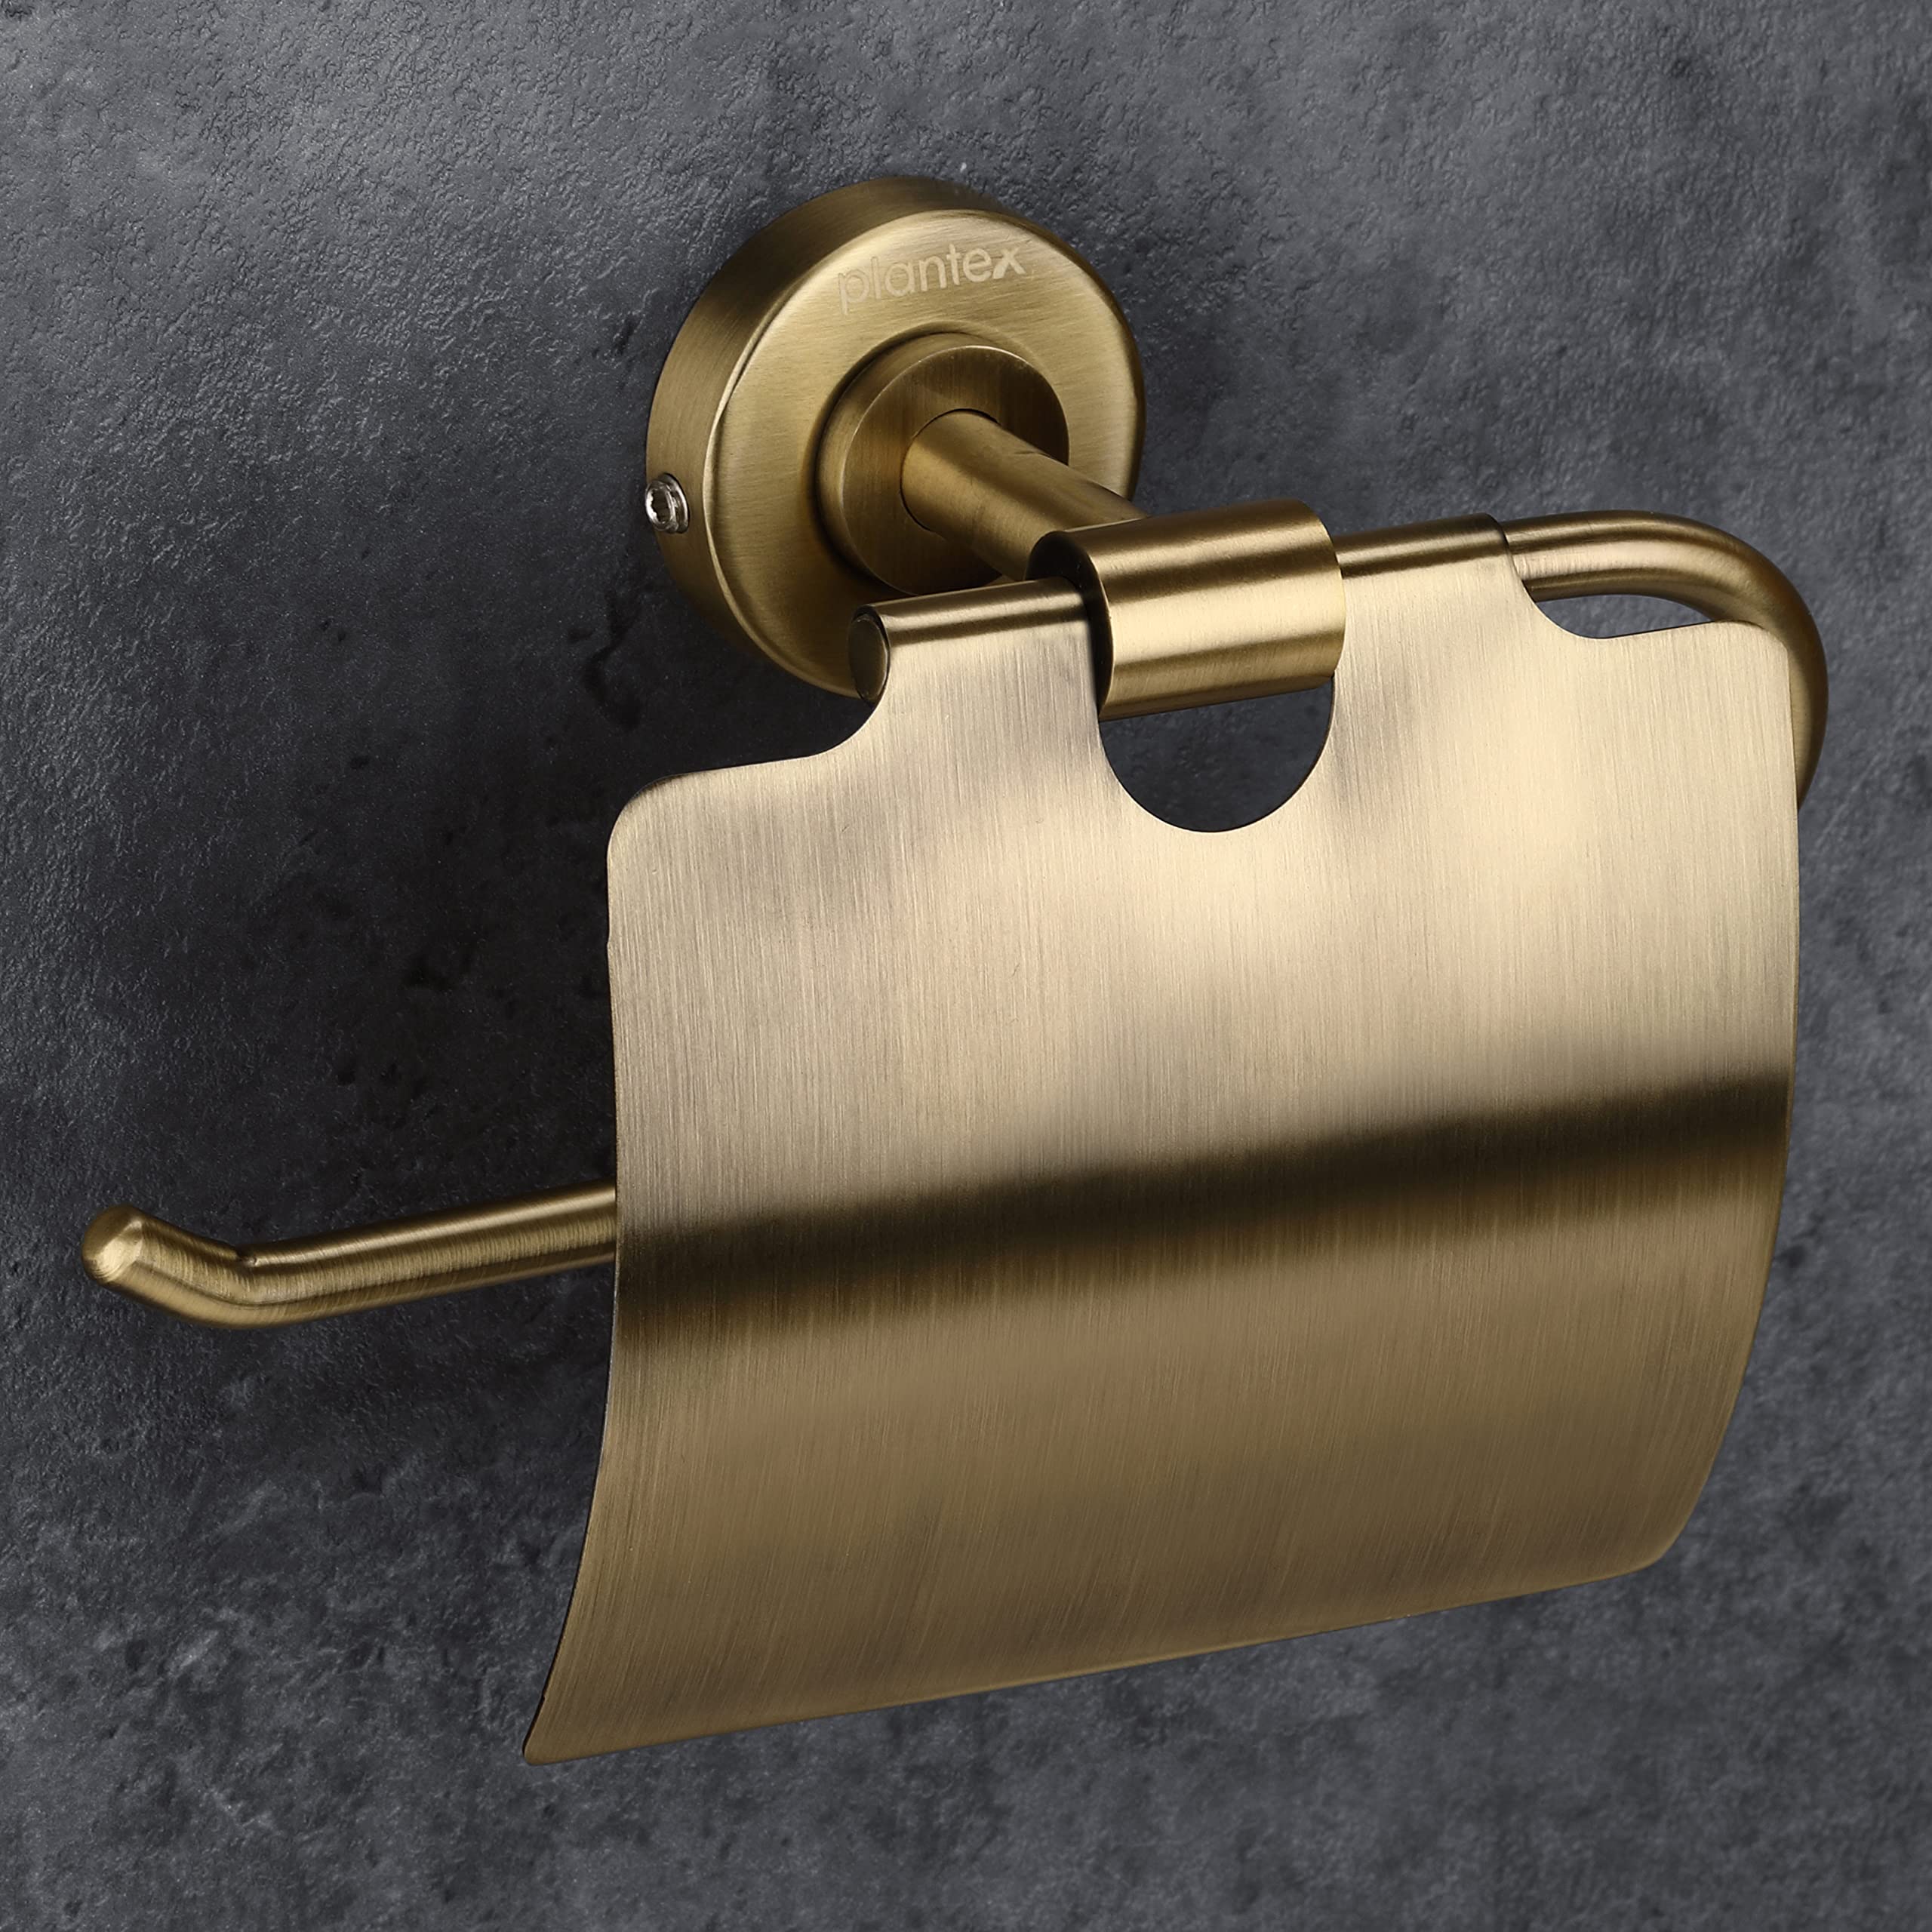 Plantex 304 Grade Stainless Steel Toilet Paper Roll Holder/Toilet Paper Holder in Bathroom/Bathroom Accessories (Brass Antique , Daizy)